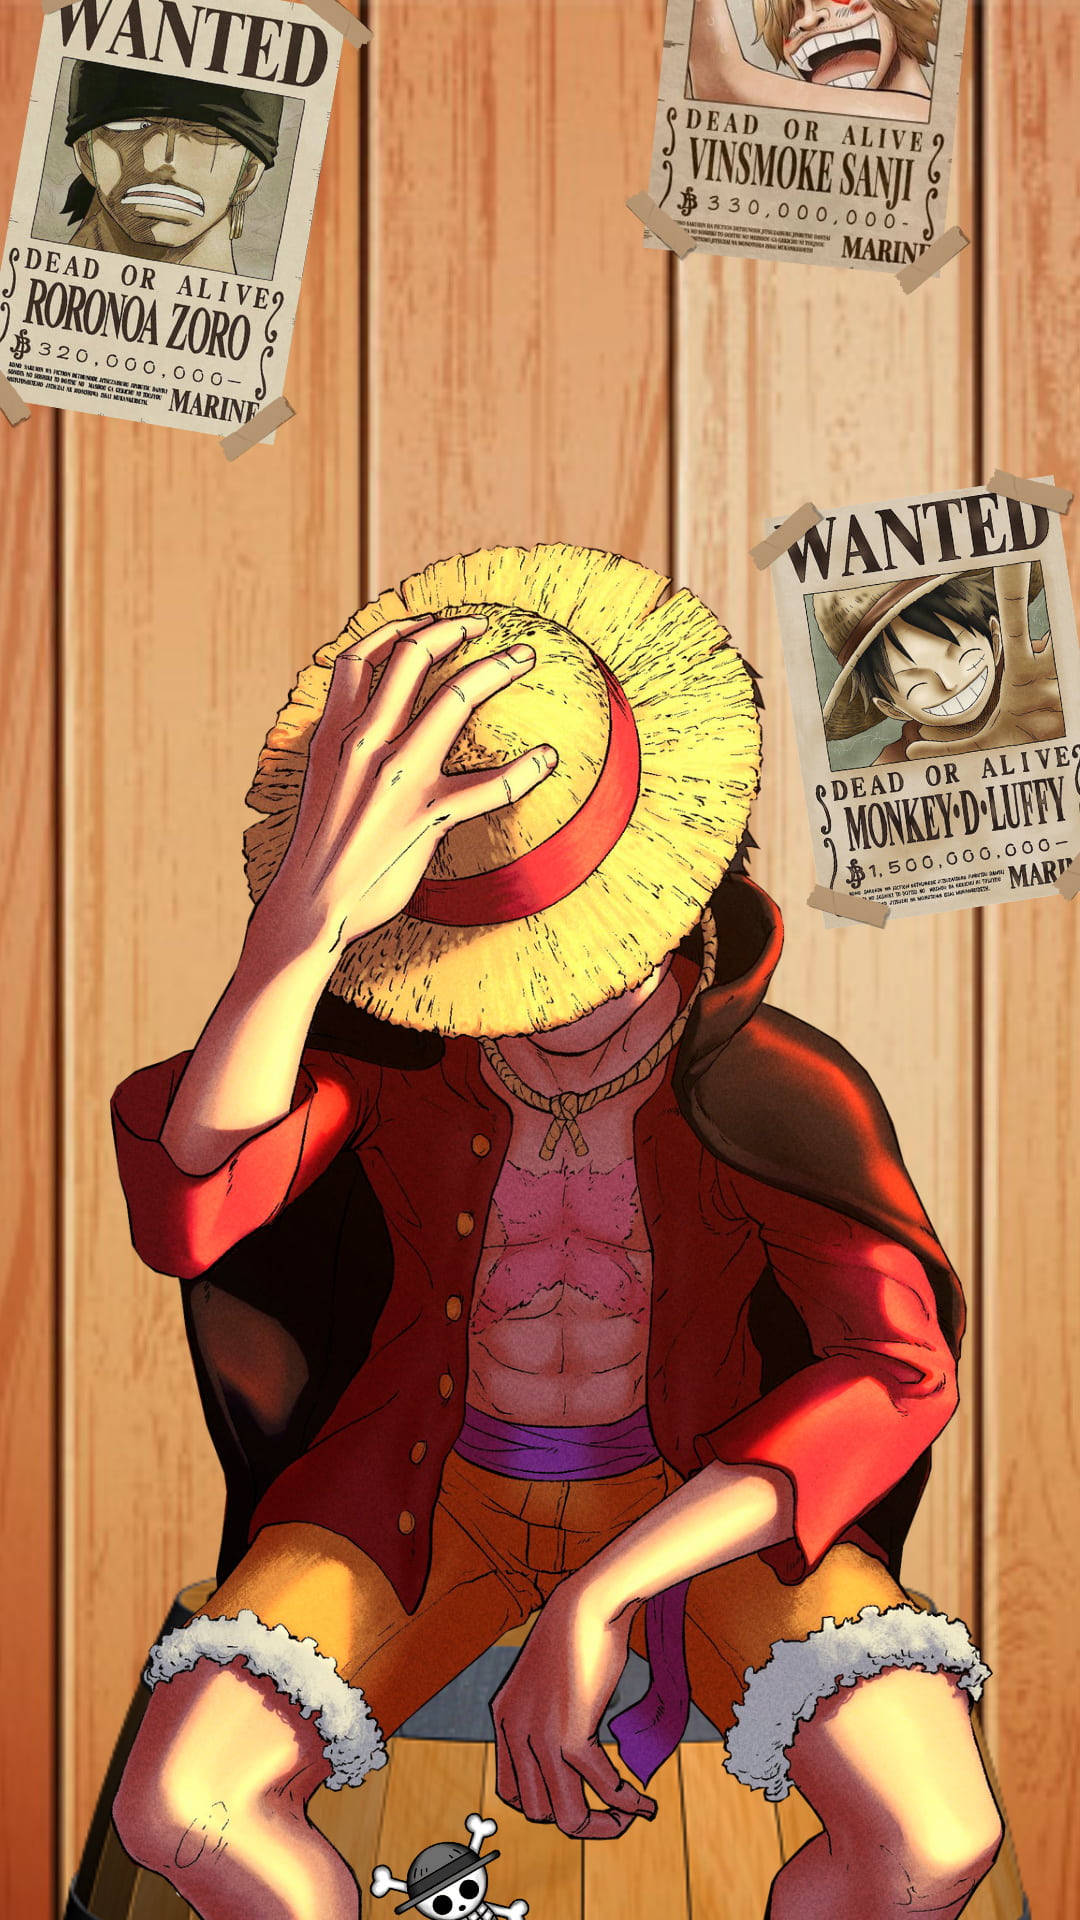 Mysterious Wanted One Piece Luffy PFP Fanart Wallpaper